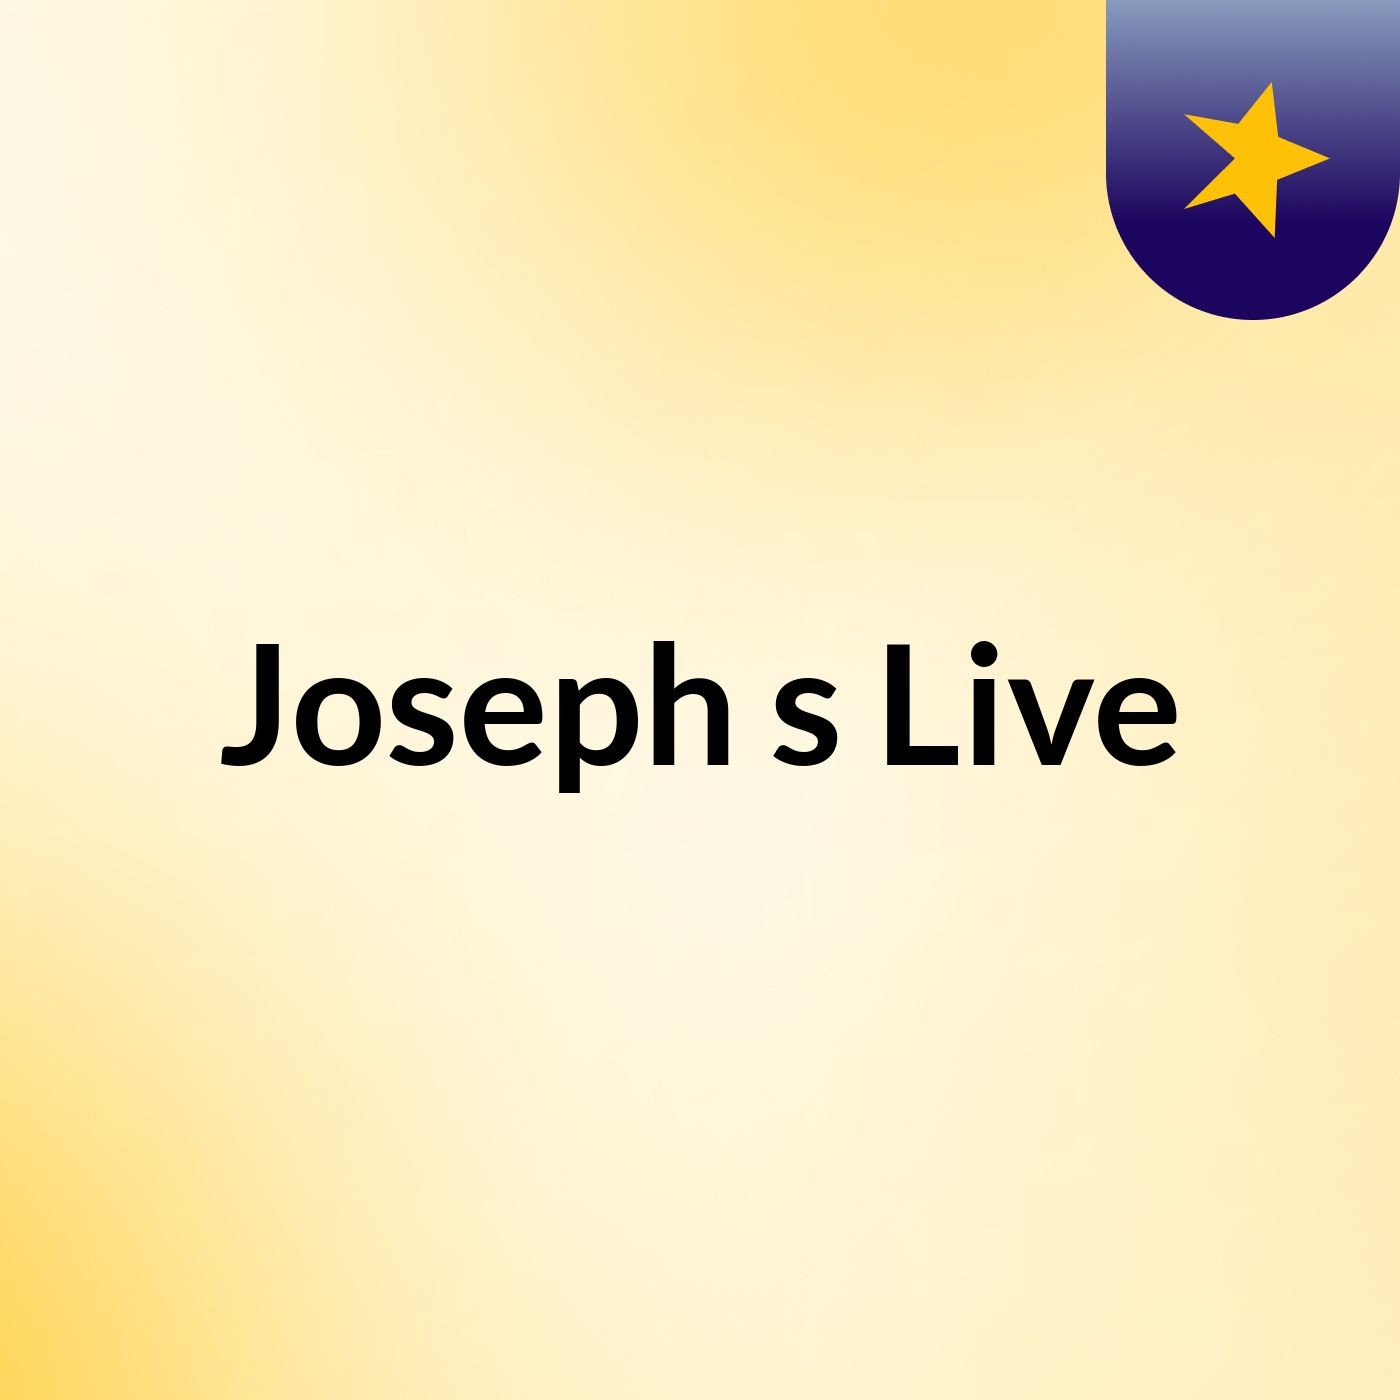 Joseph's Live